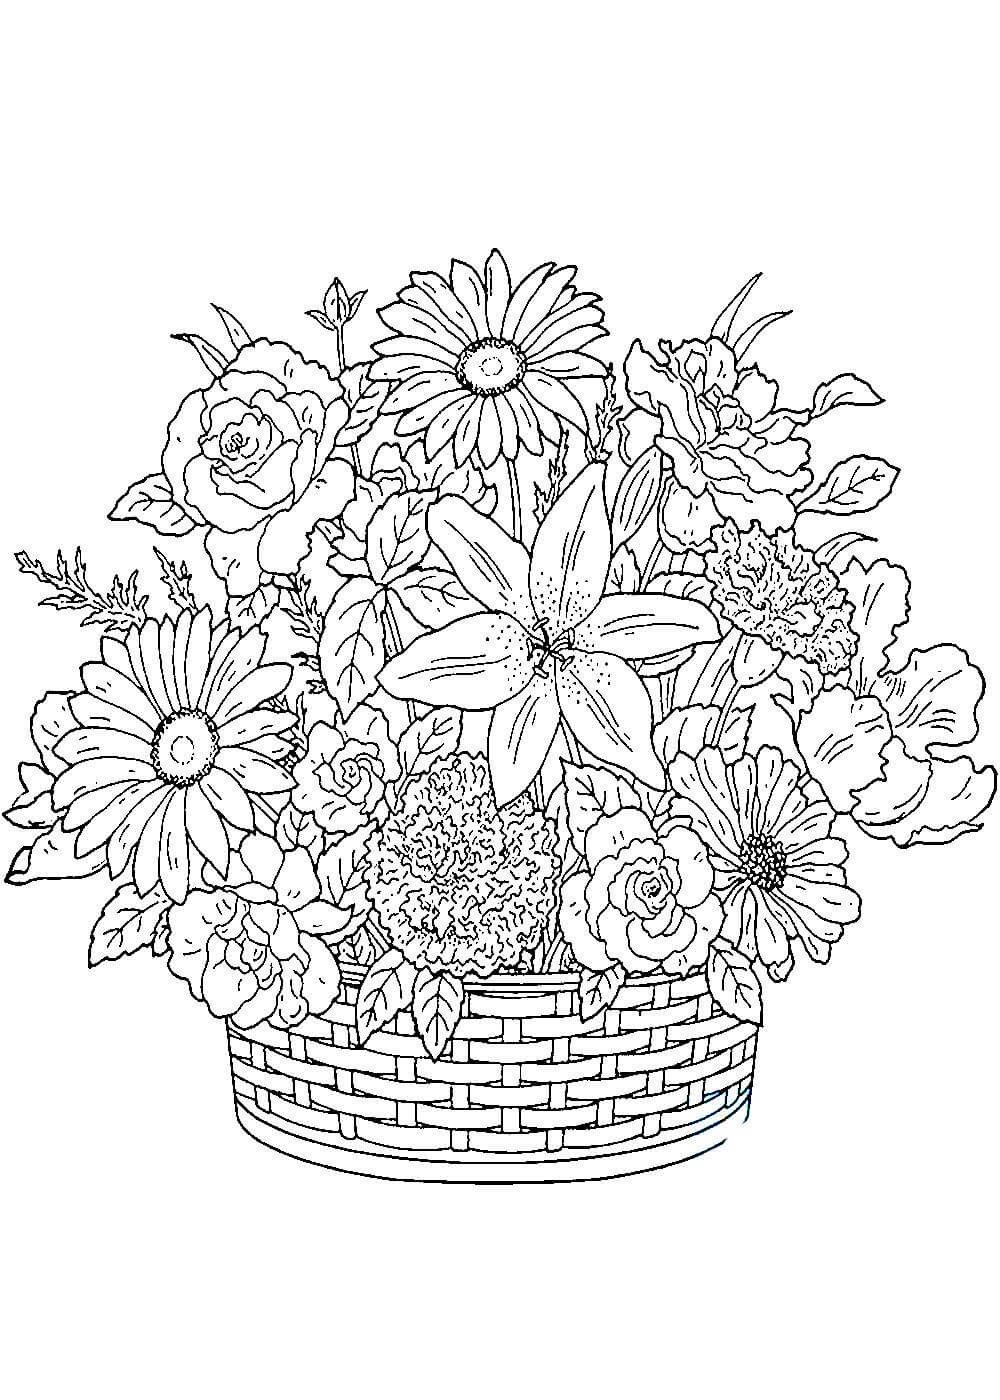 Раскраска букет цветов для мамы